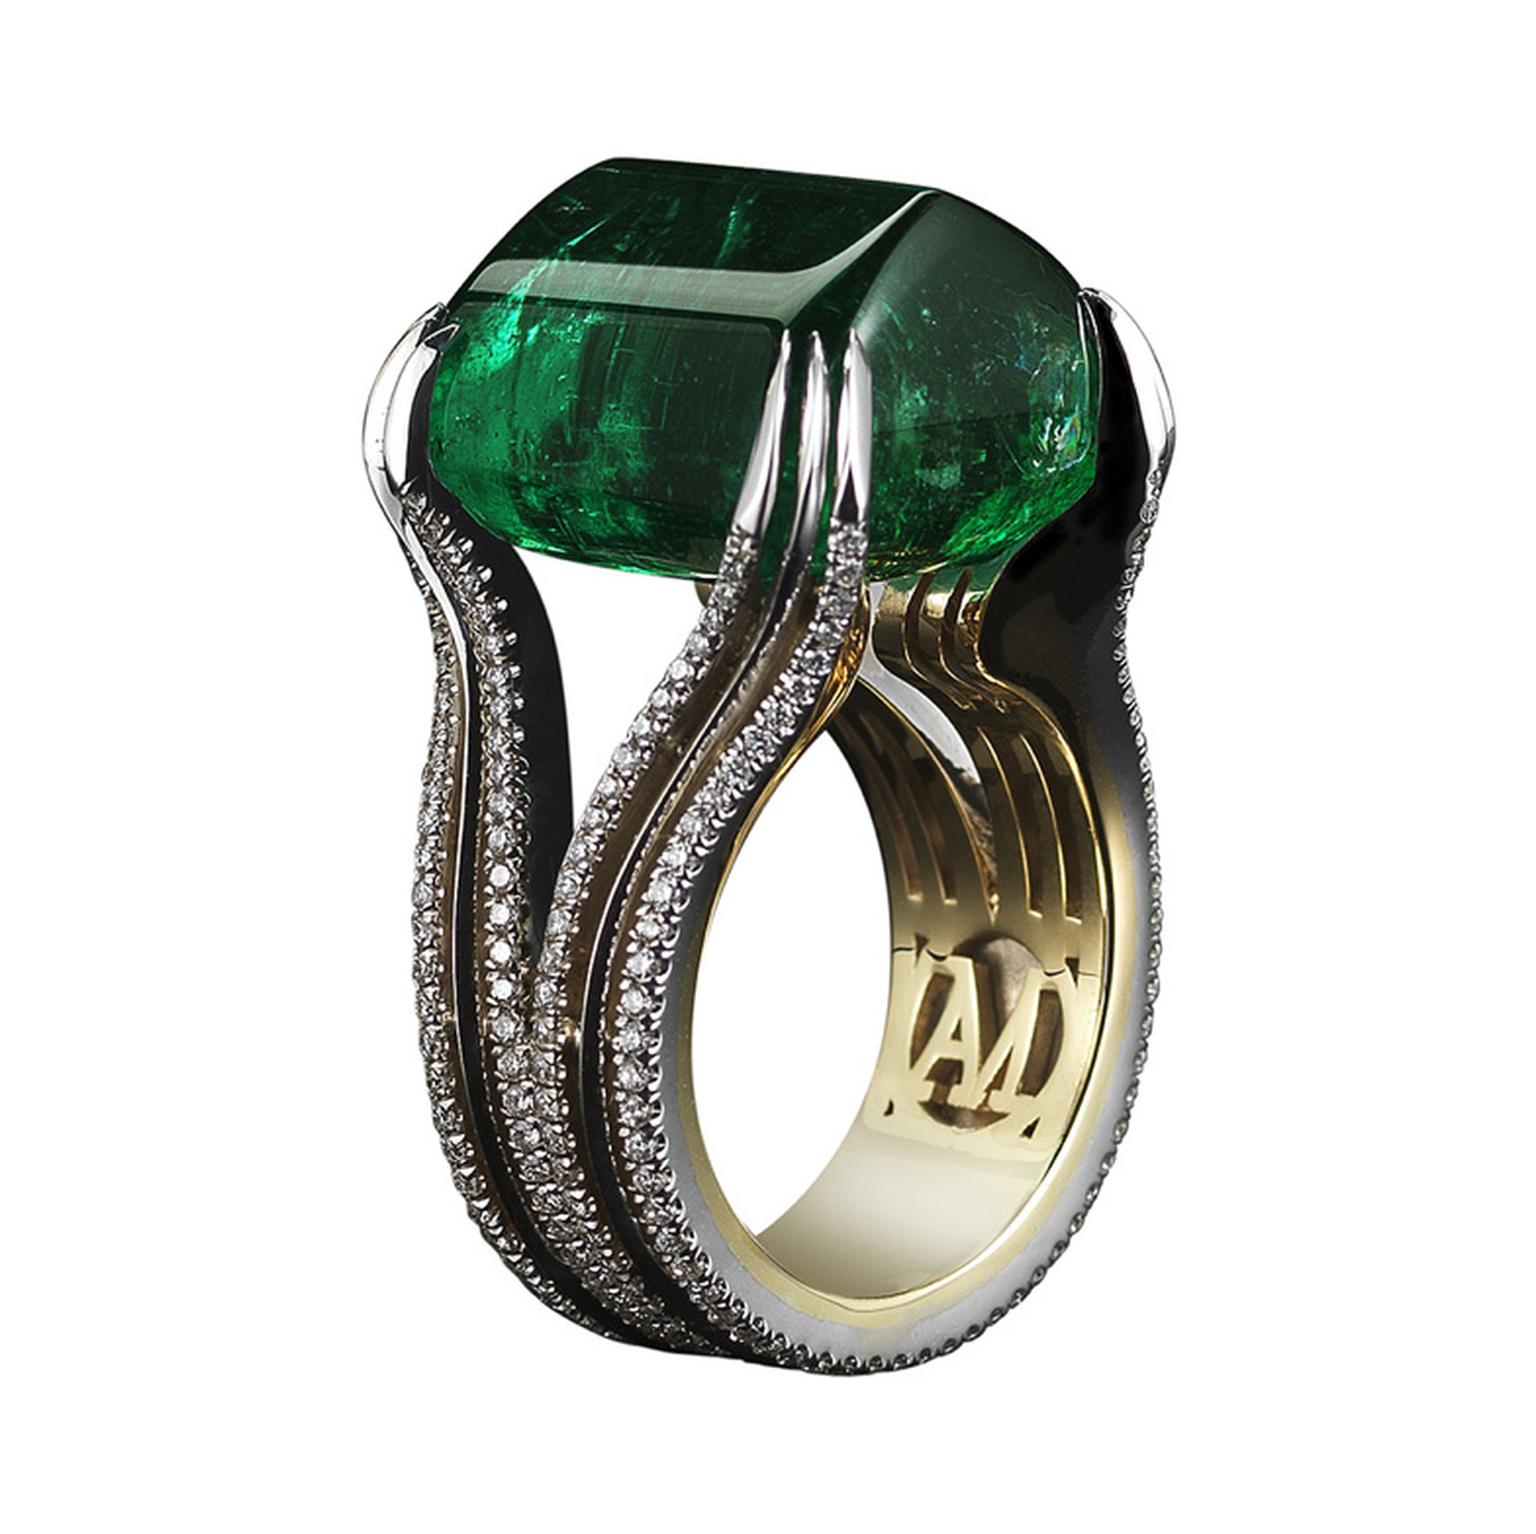 Gemfields' 26ct Zambian emerald ring by New York jewellery designer Alexandra Mor.